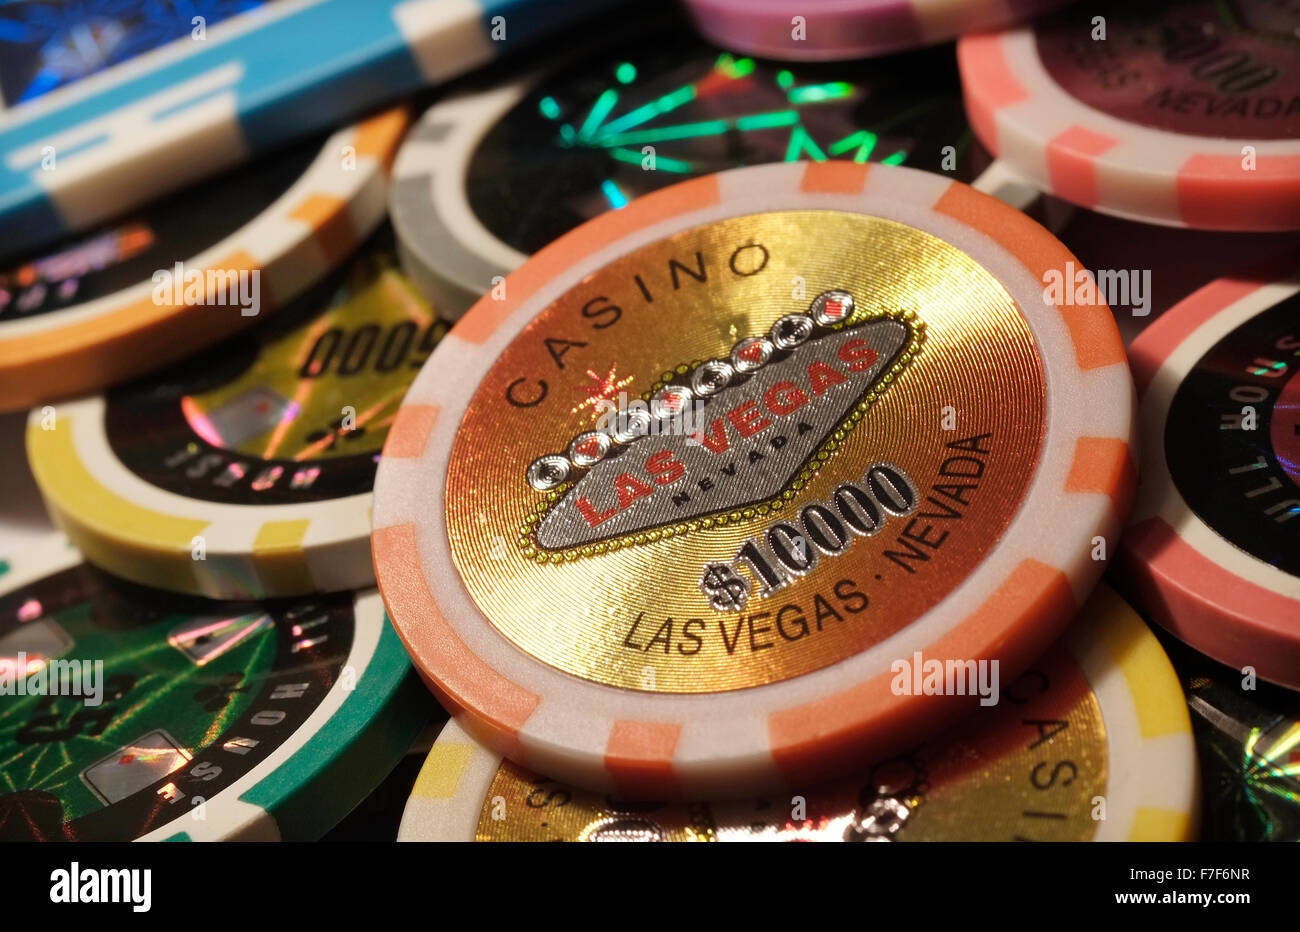 Casino Las Vegas Types Money Cards Stock Vector (Royalty Free) 1064523794